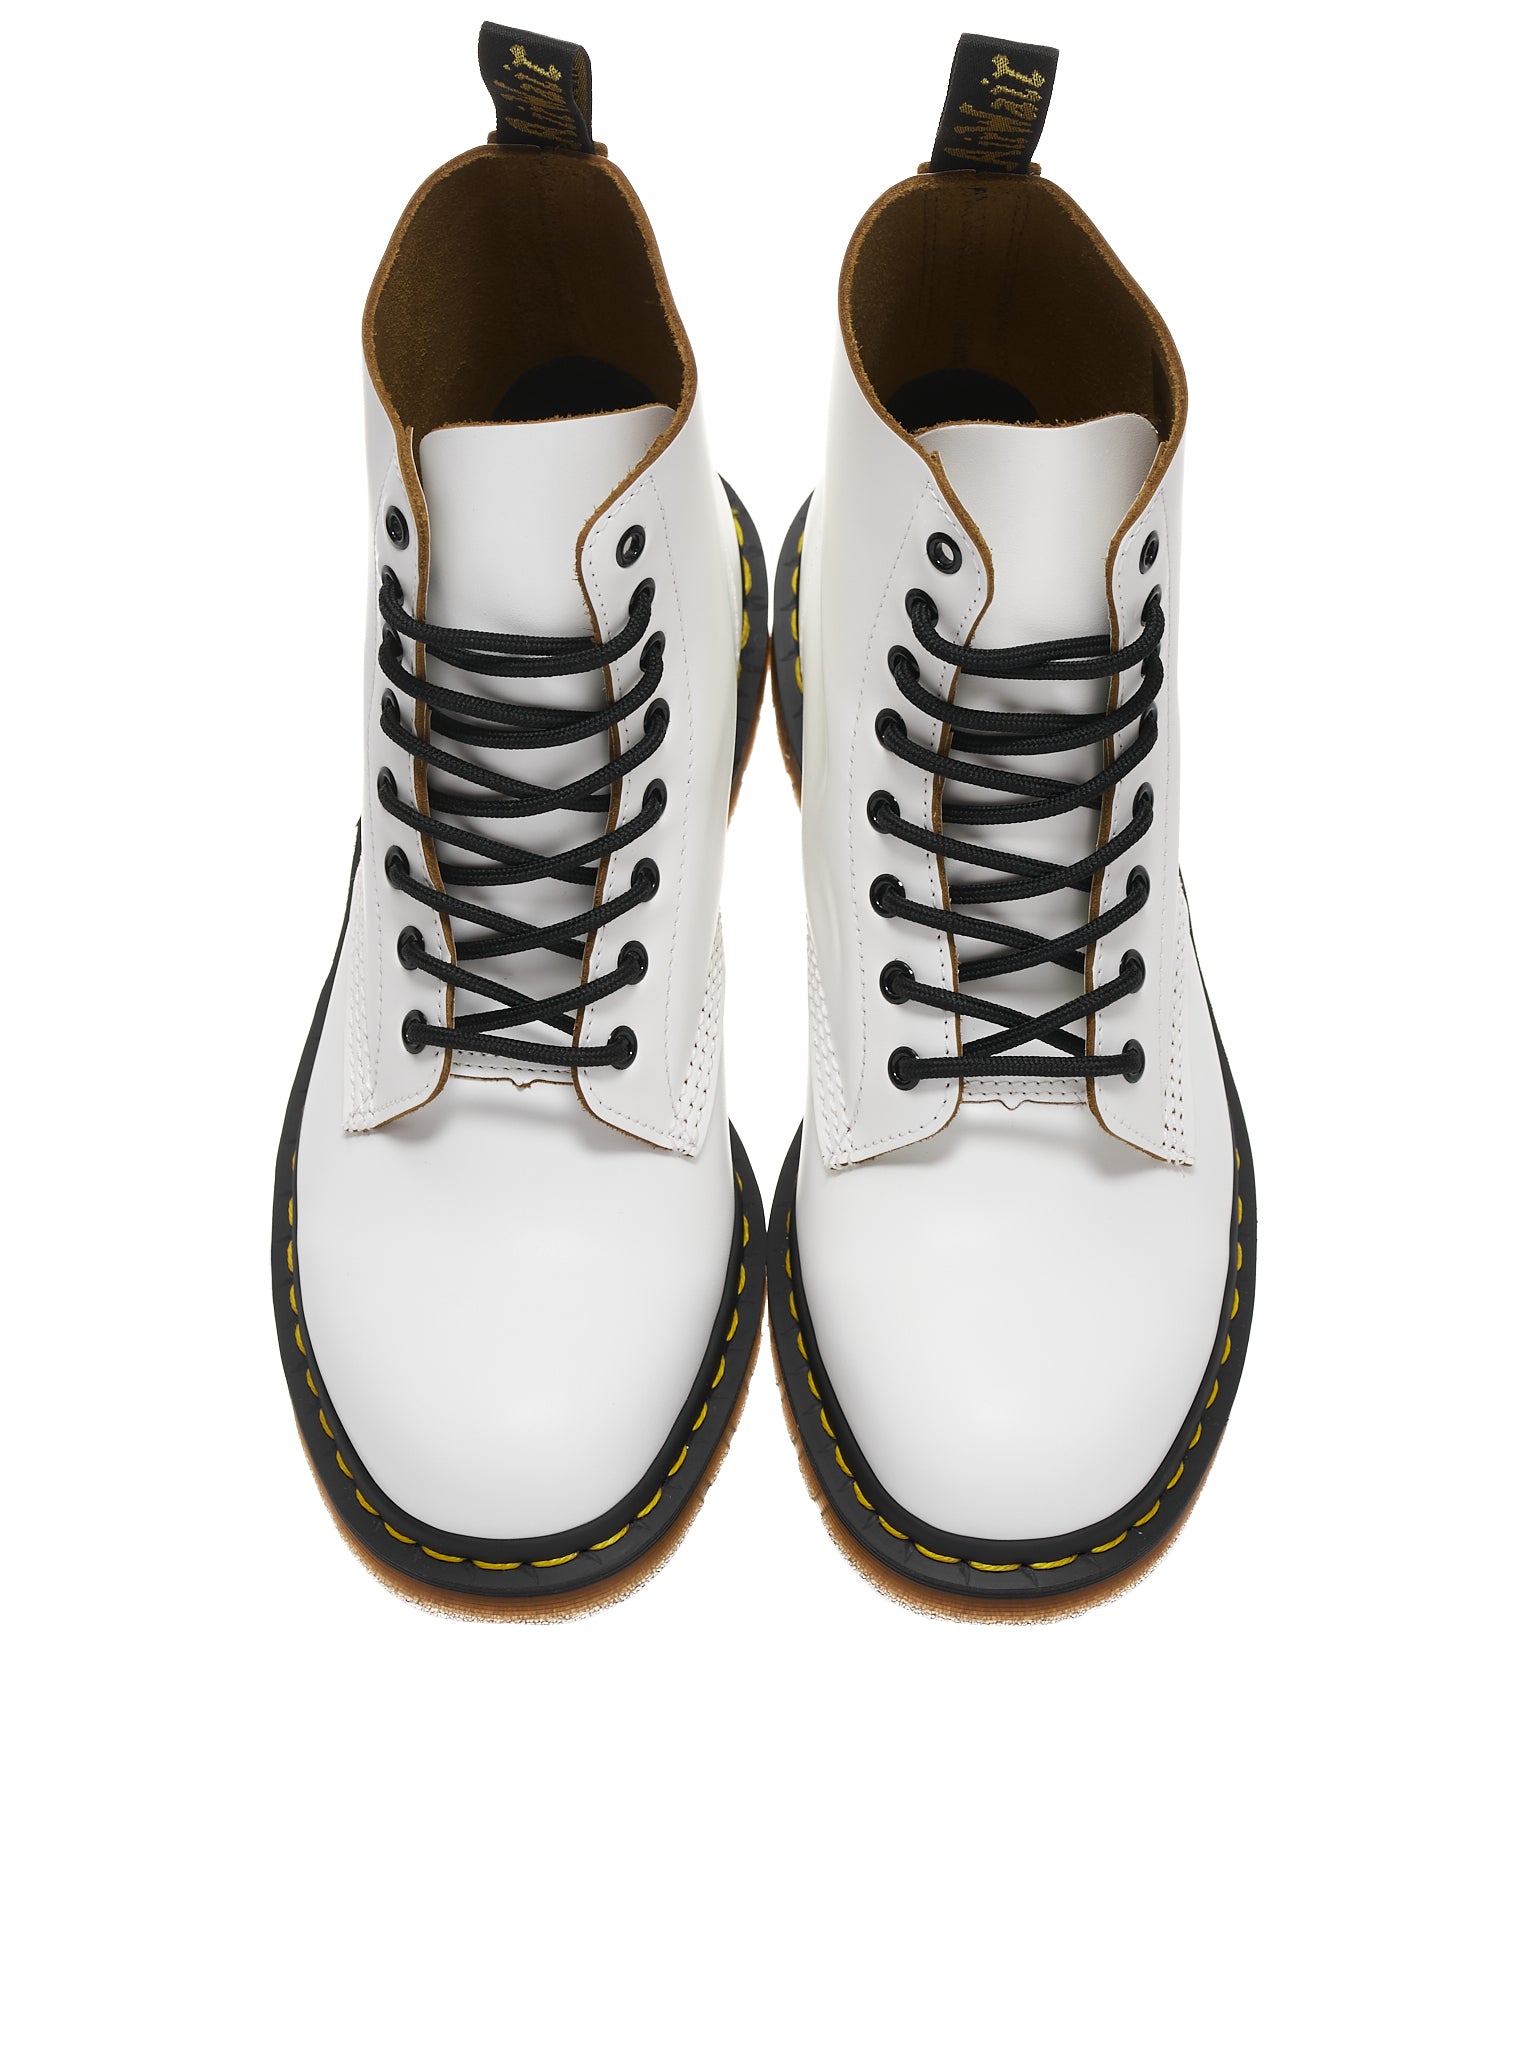 Dr. Martens 1460 Vintage Boots | H. Lorenzo - top